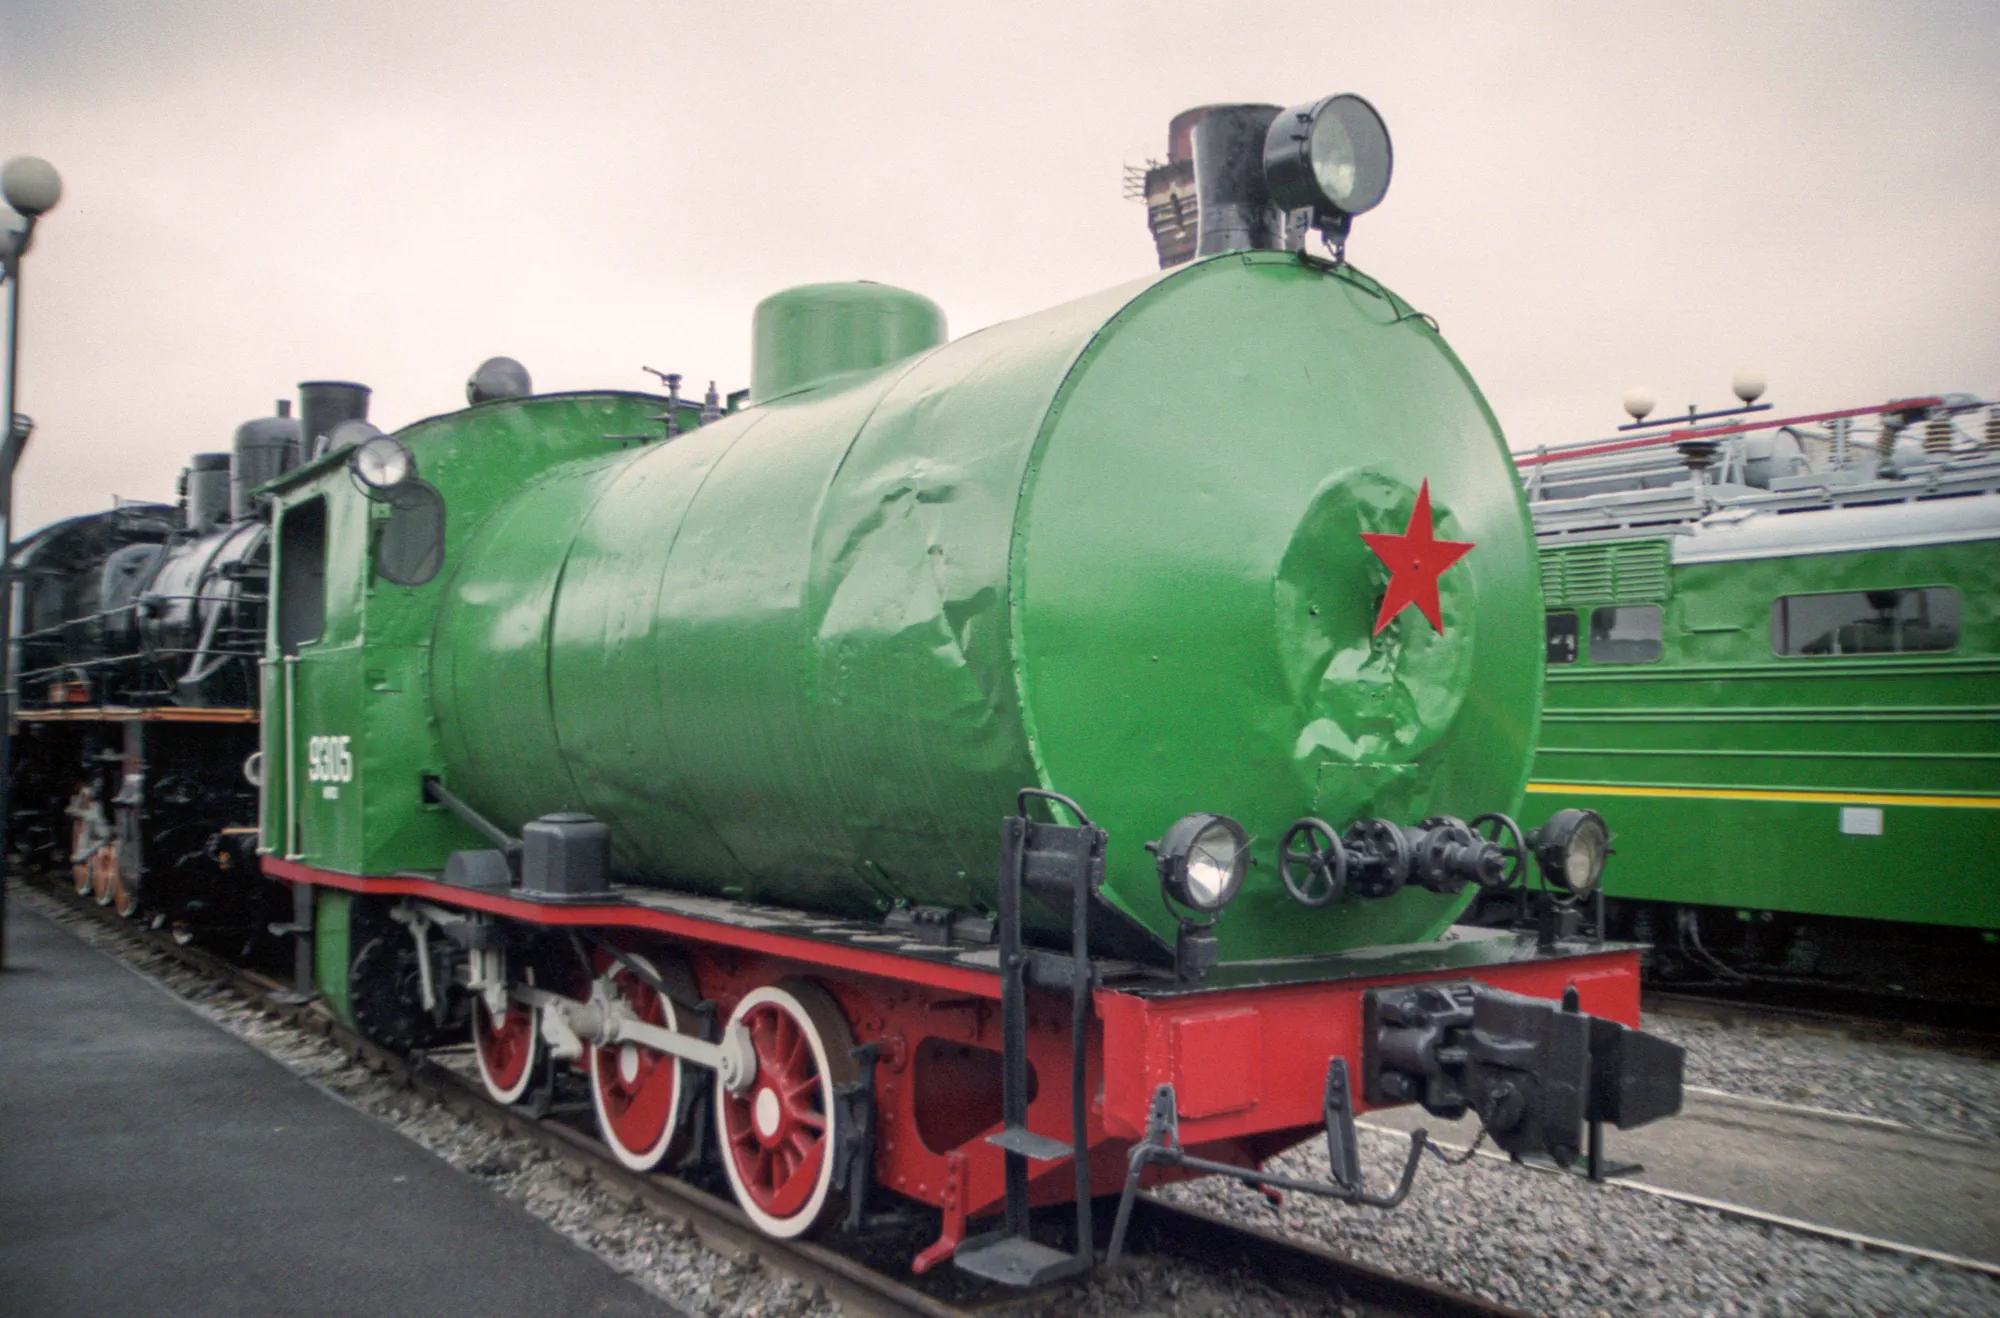 Fireless Locomotive #9305